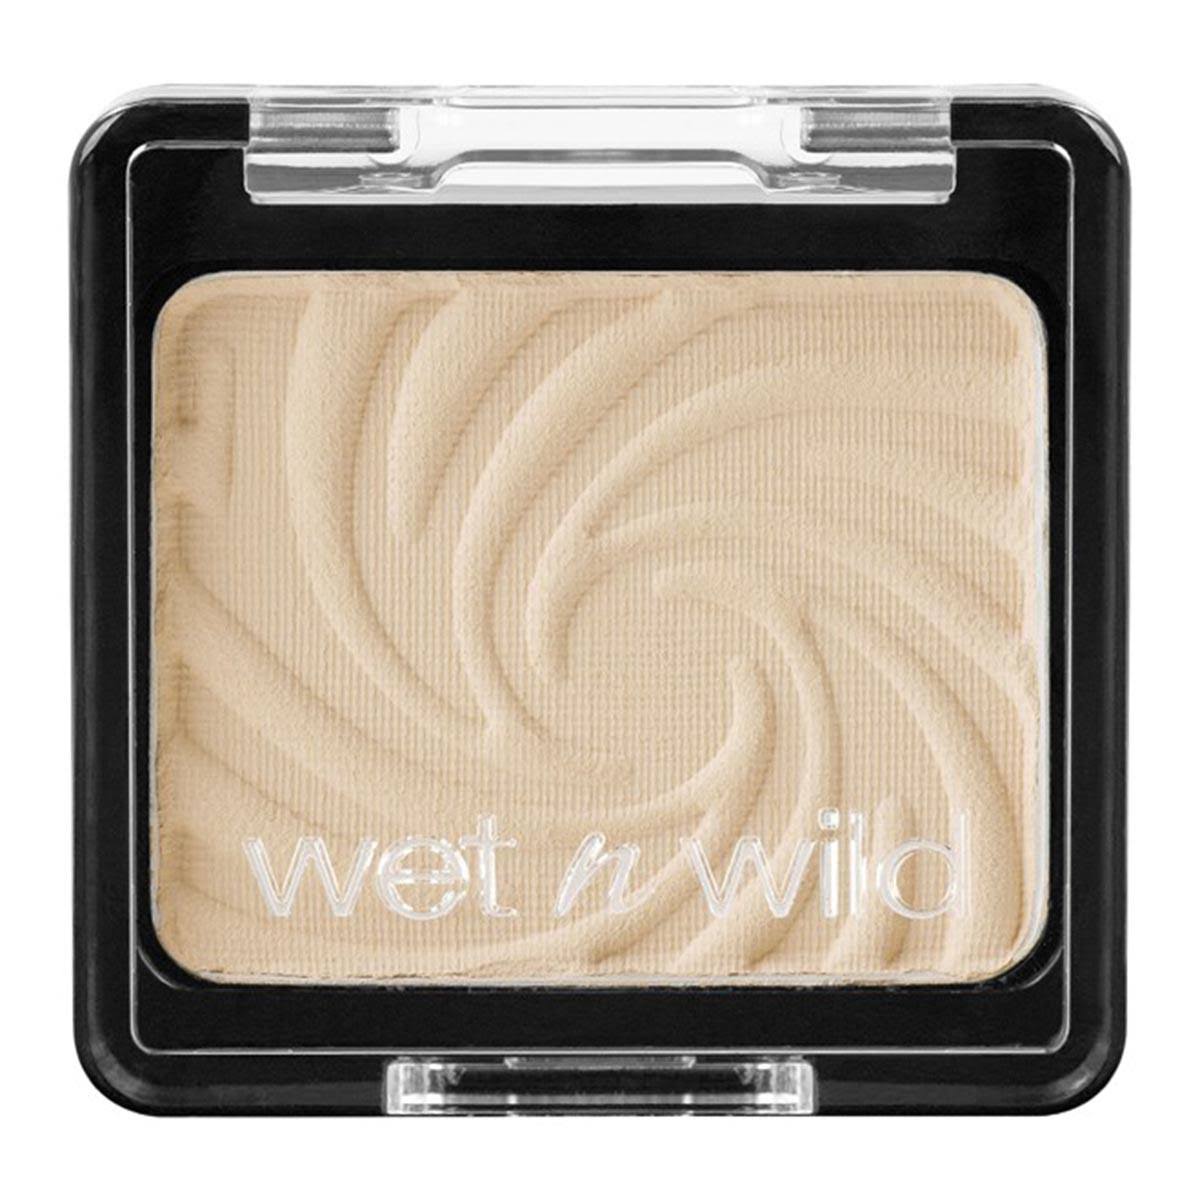 Wet n Wild Color Icon Single Eyeshadow - Creme Brulee